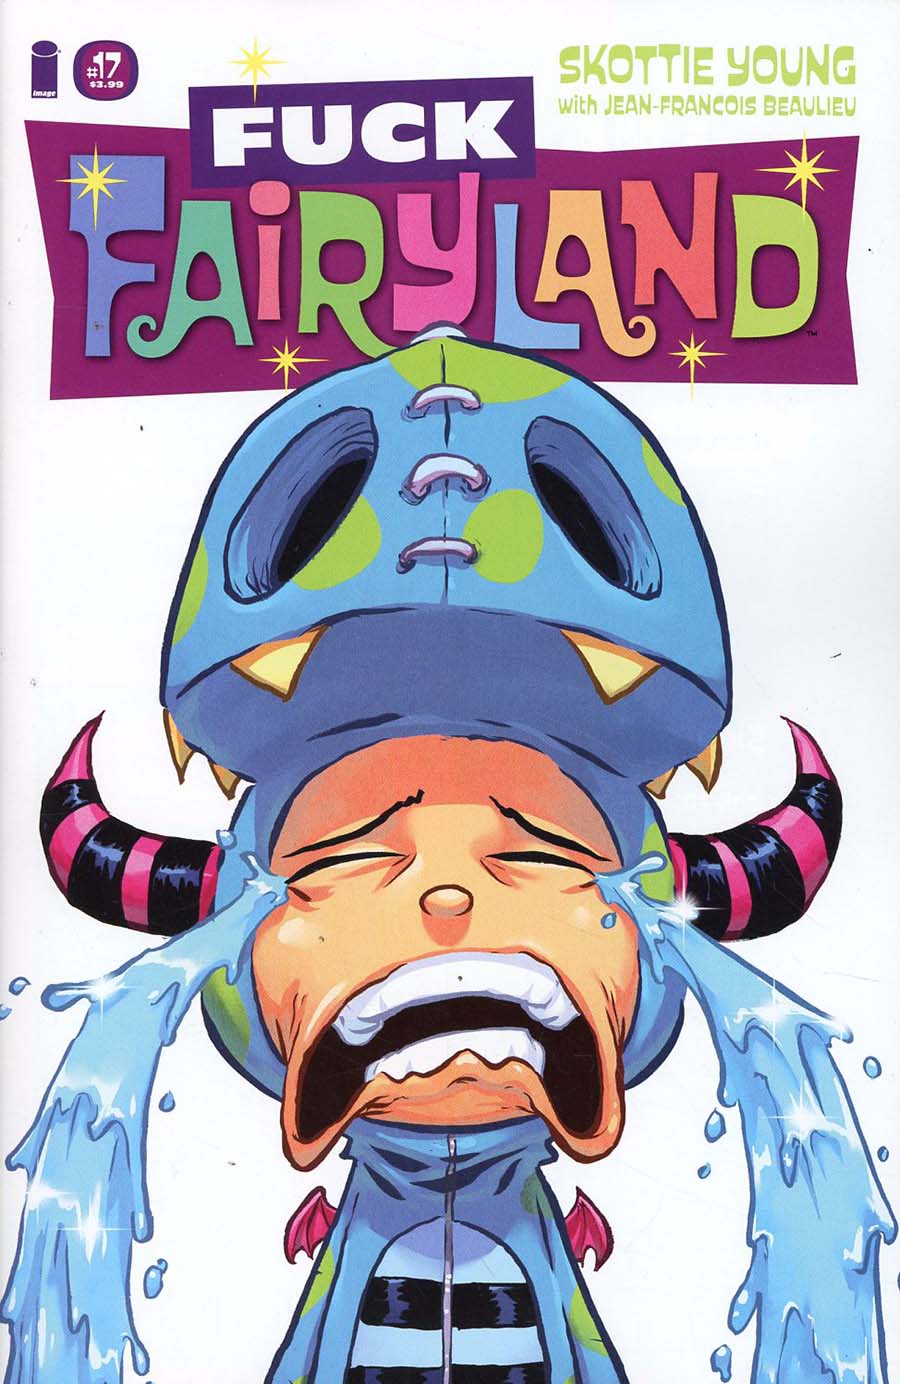 I Hate Fairyland #17 F*ck Fairyland Edition [2018]